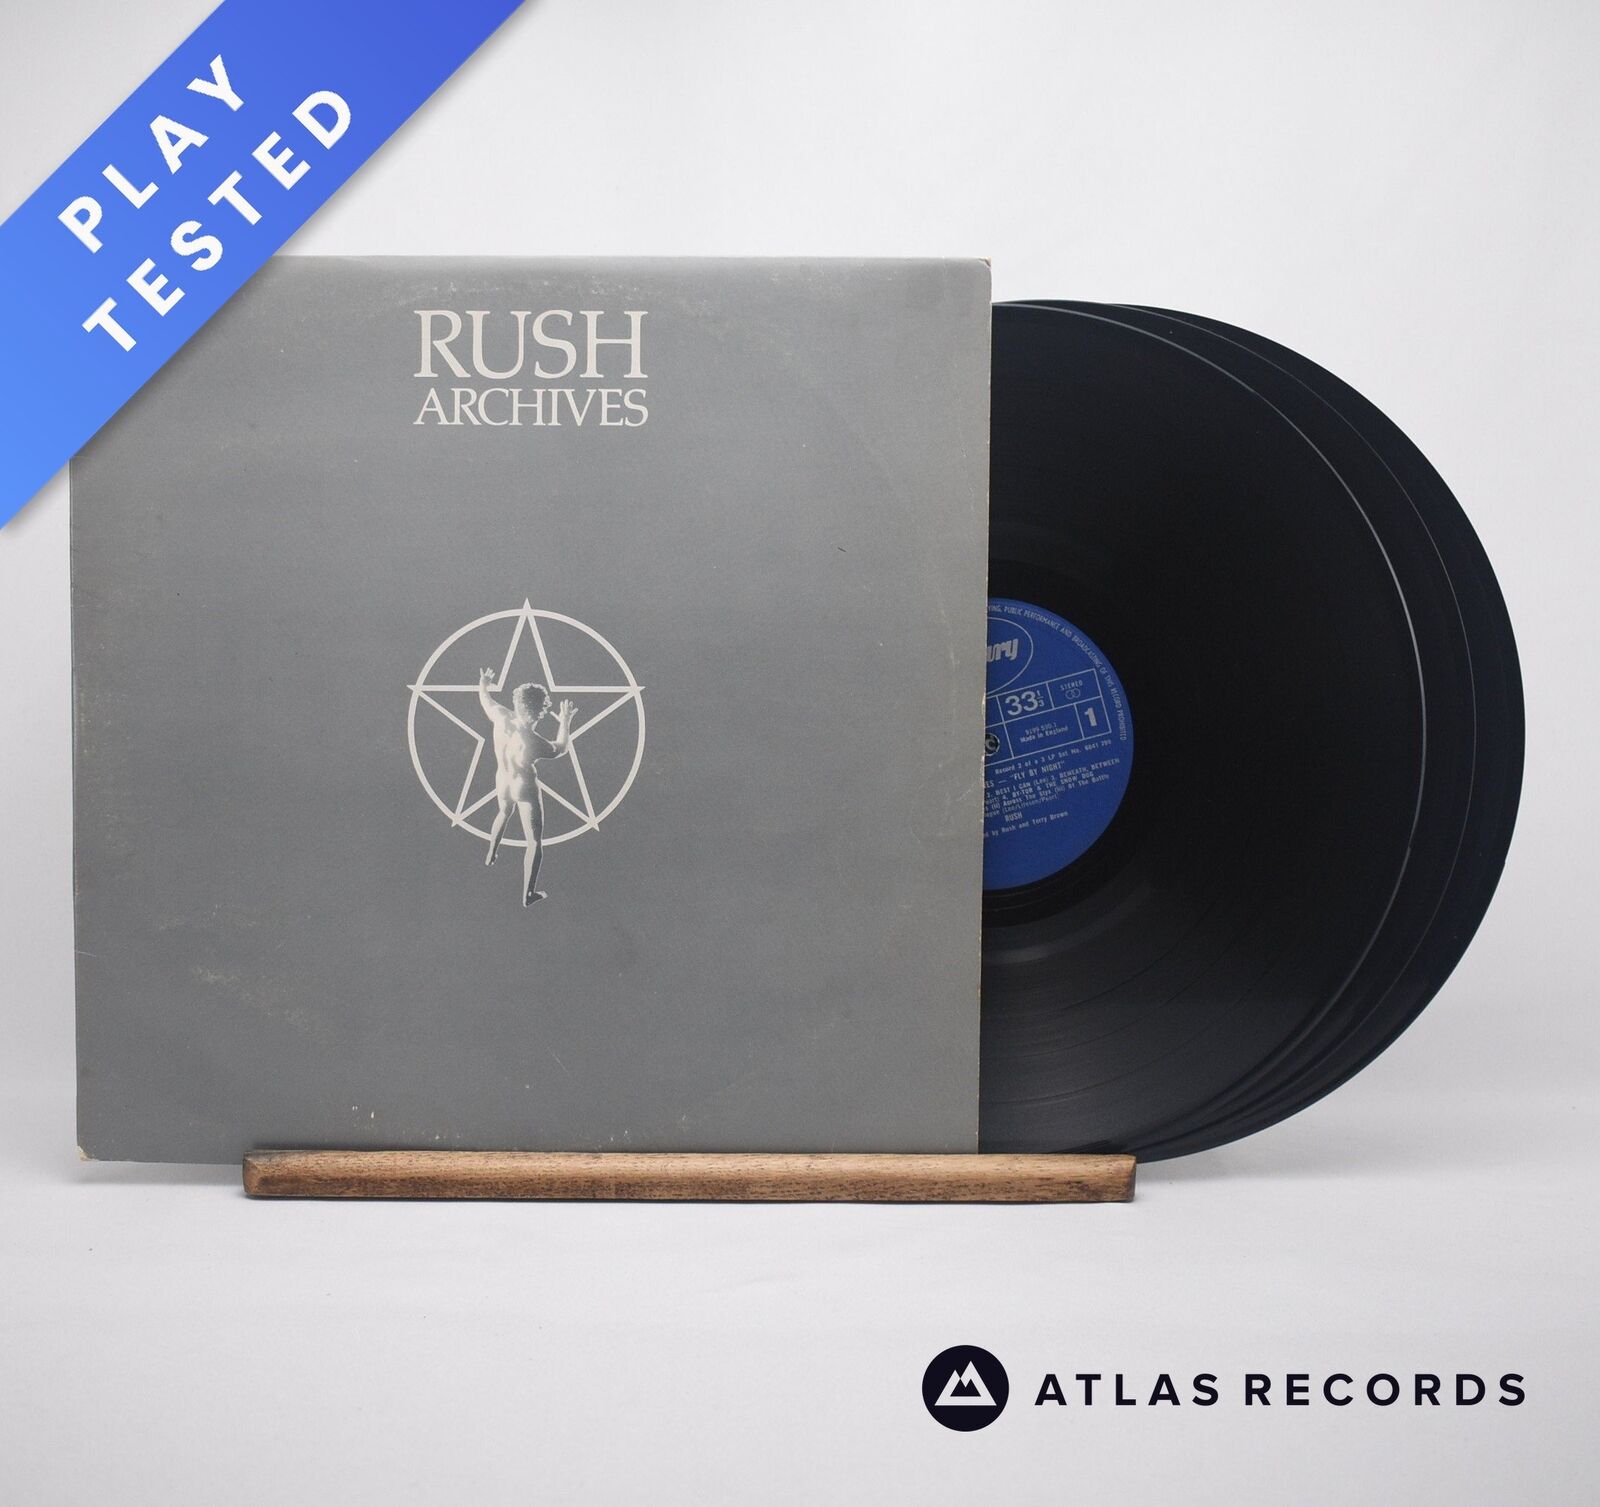 Rush Archives 1Y//2 2Y//2 Gatefold 3 x LP Vinyl Record 6641 799 - VG+/VG+